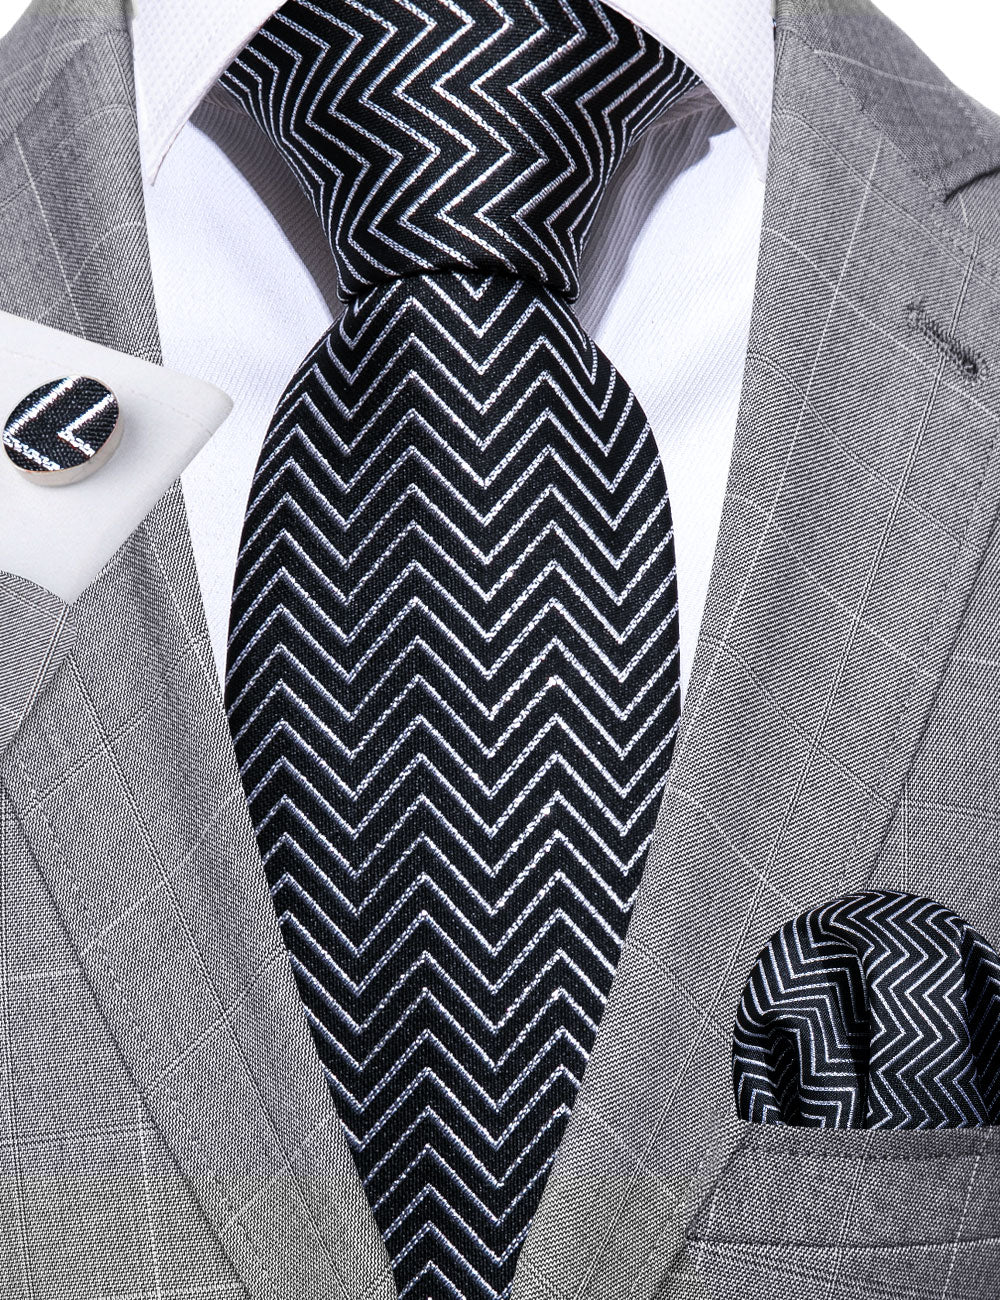 Barry.Wang New Black White Striped Tie Handkerchief Cufflinks Set